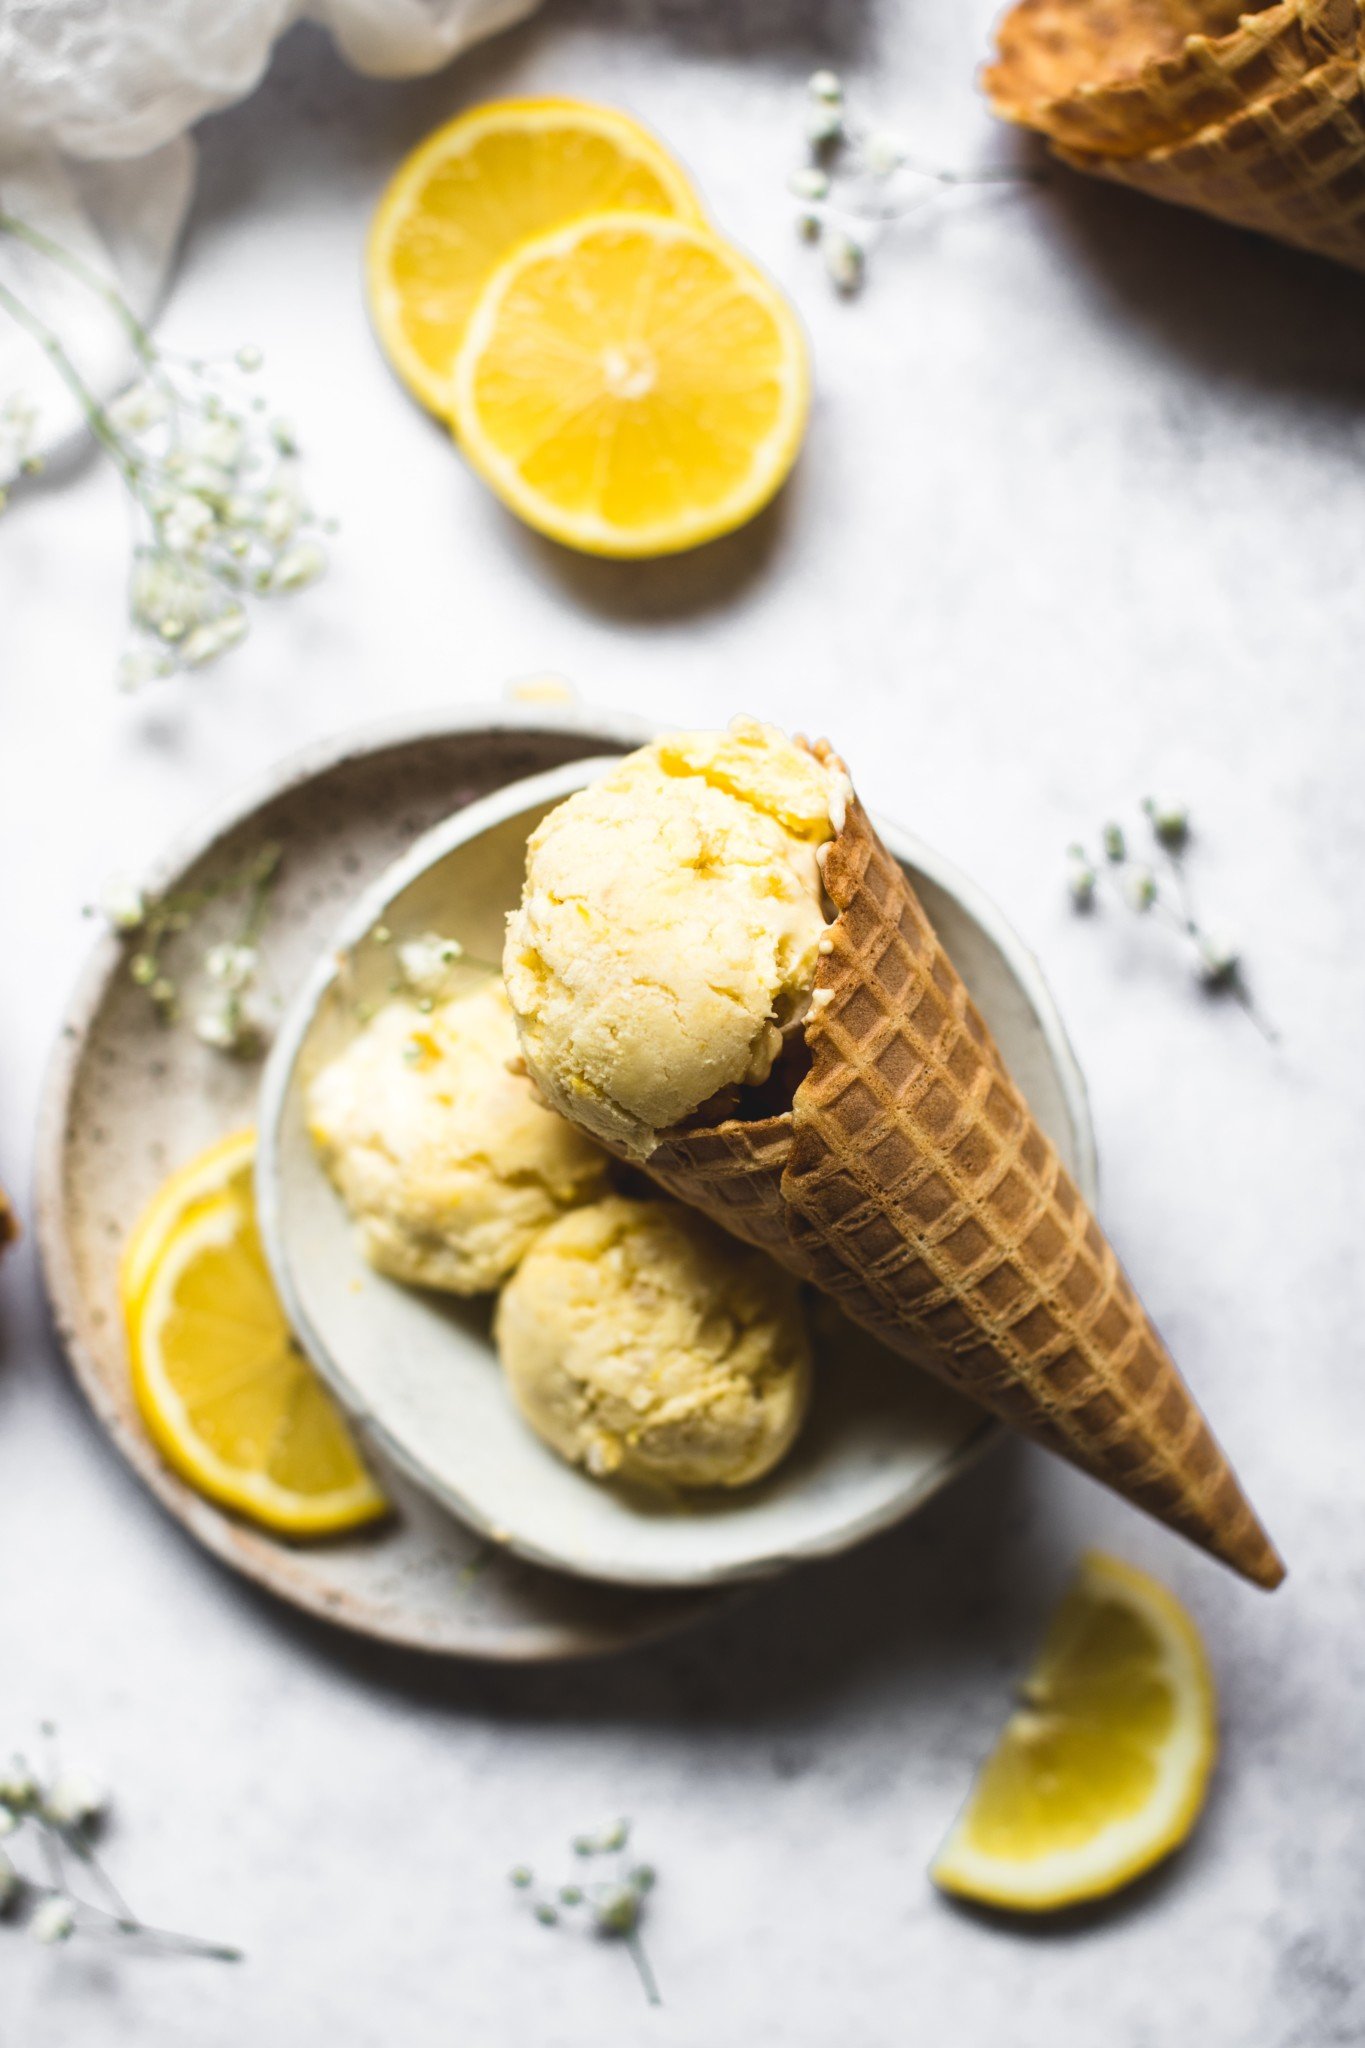 Lemon ice cream in a waffle ice cream cone